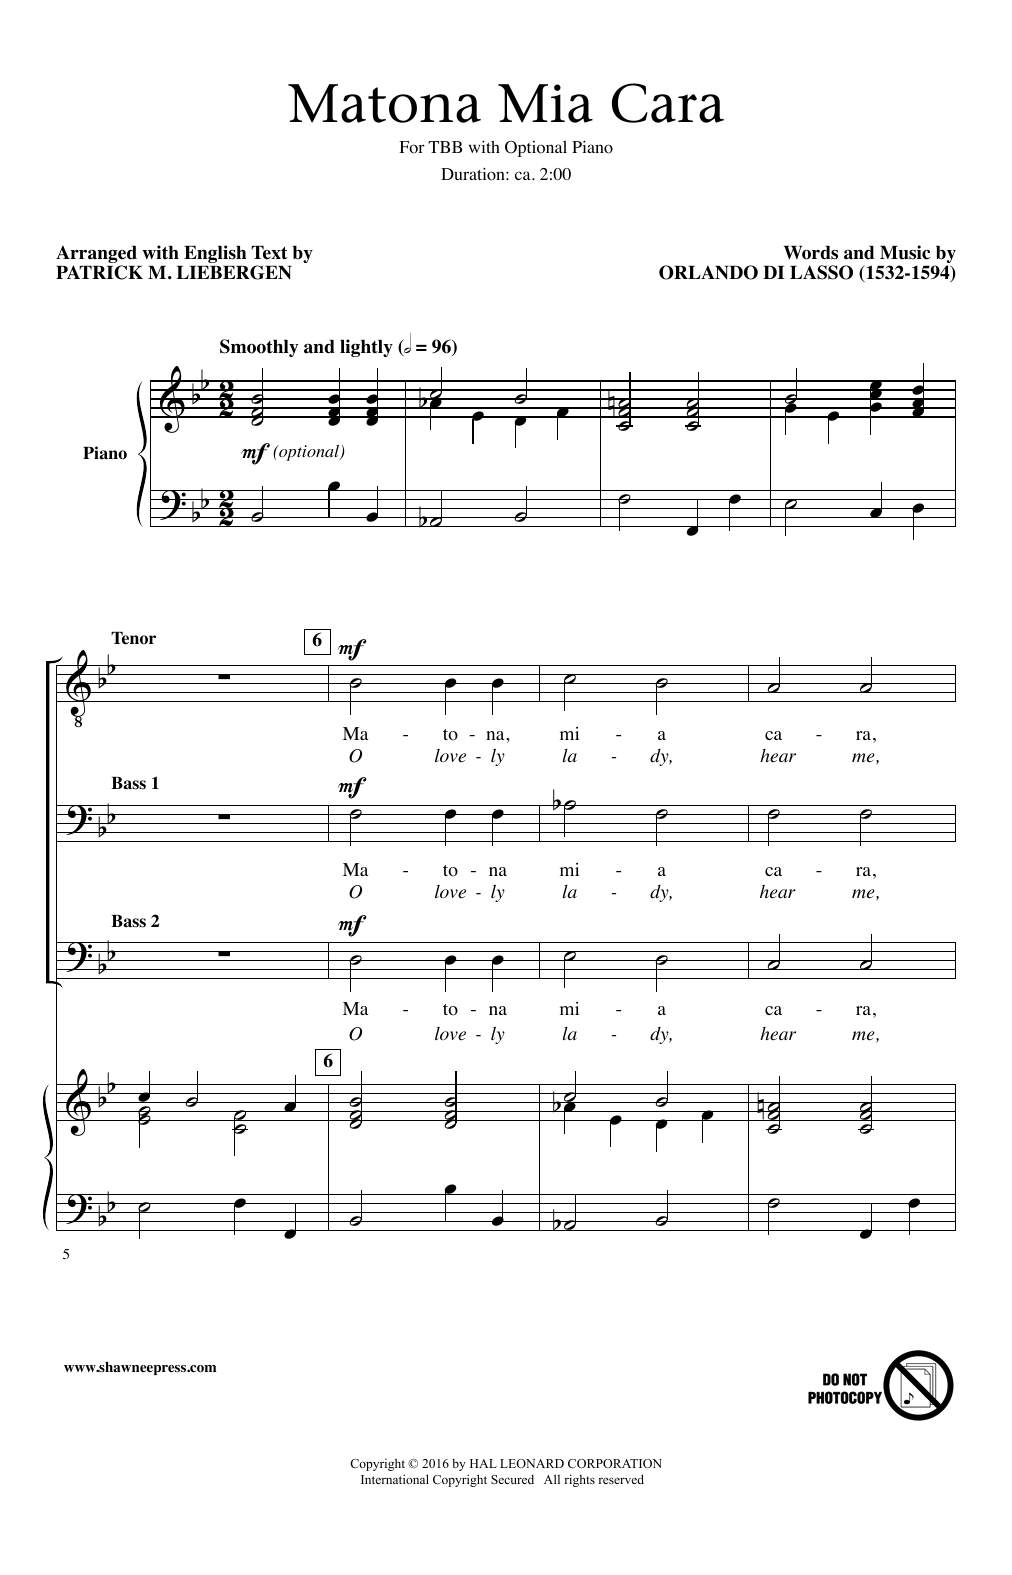 Patrick M. Liebergen Matona Mia Cara Sheet Music Notes & Chords for TBB - Download or Print PDF